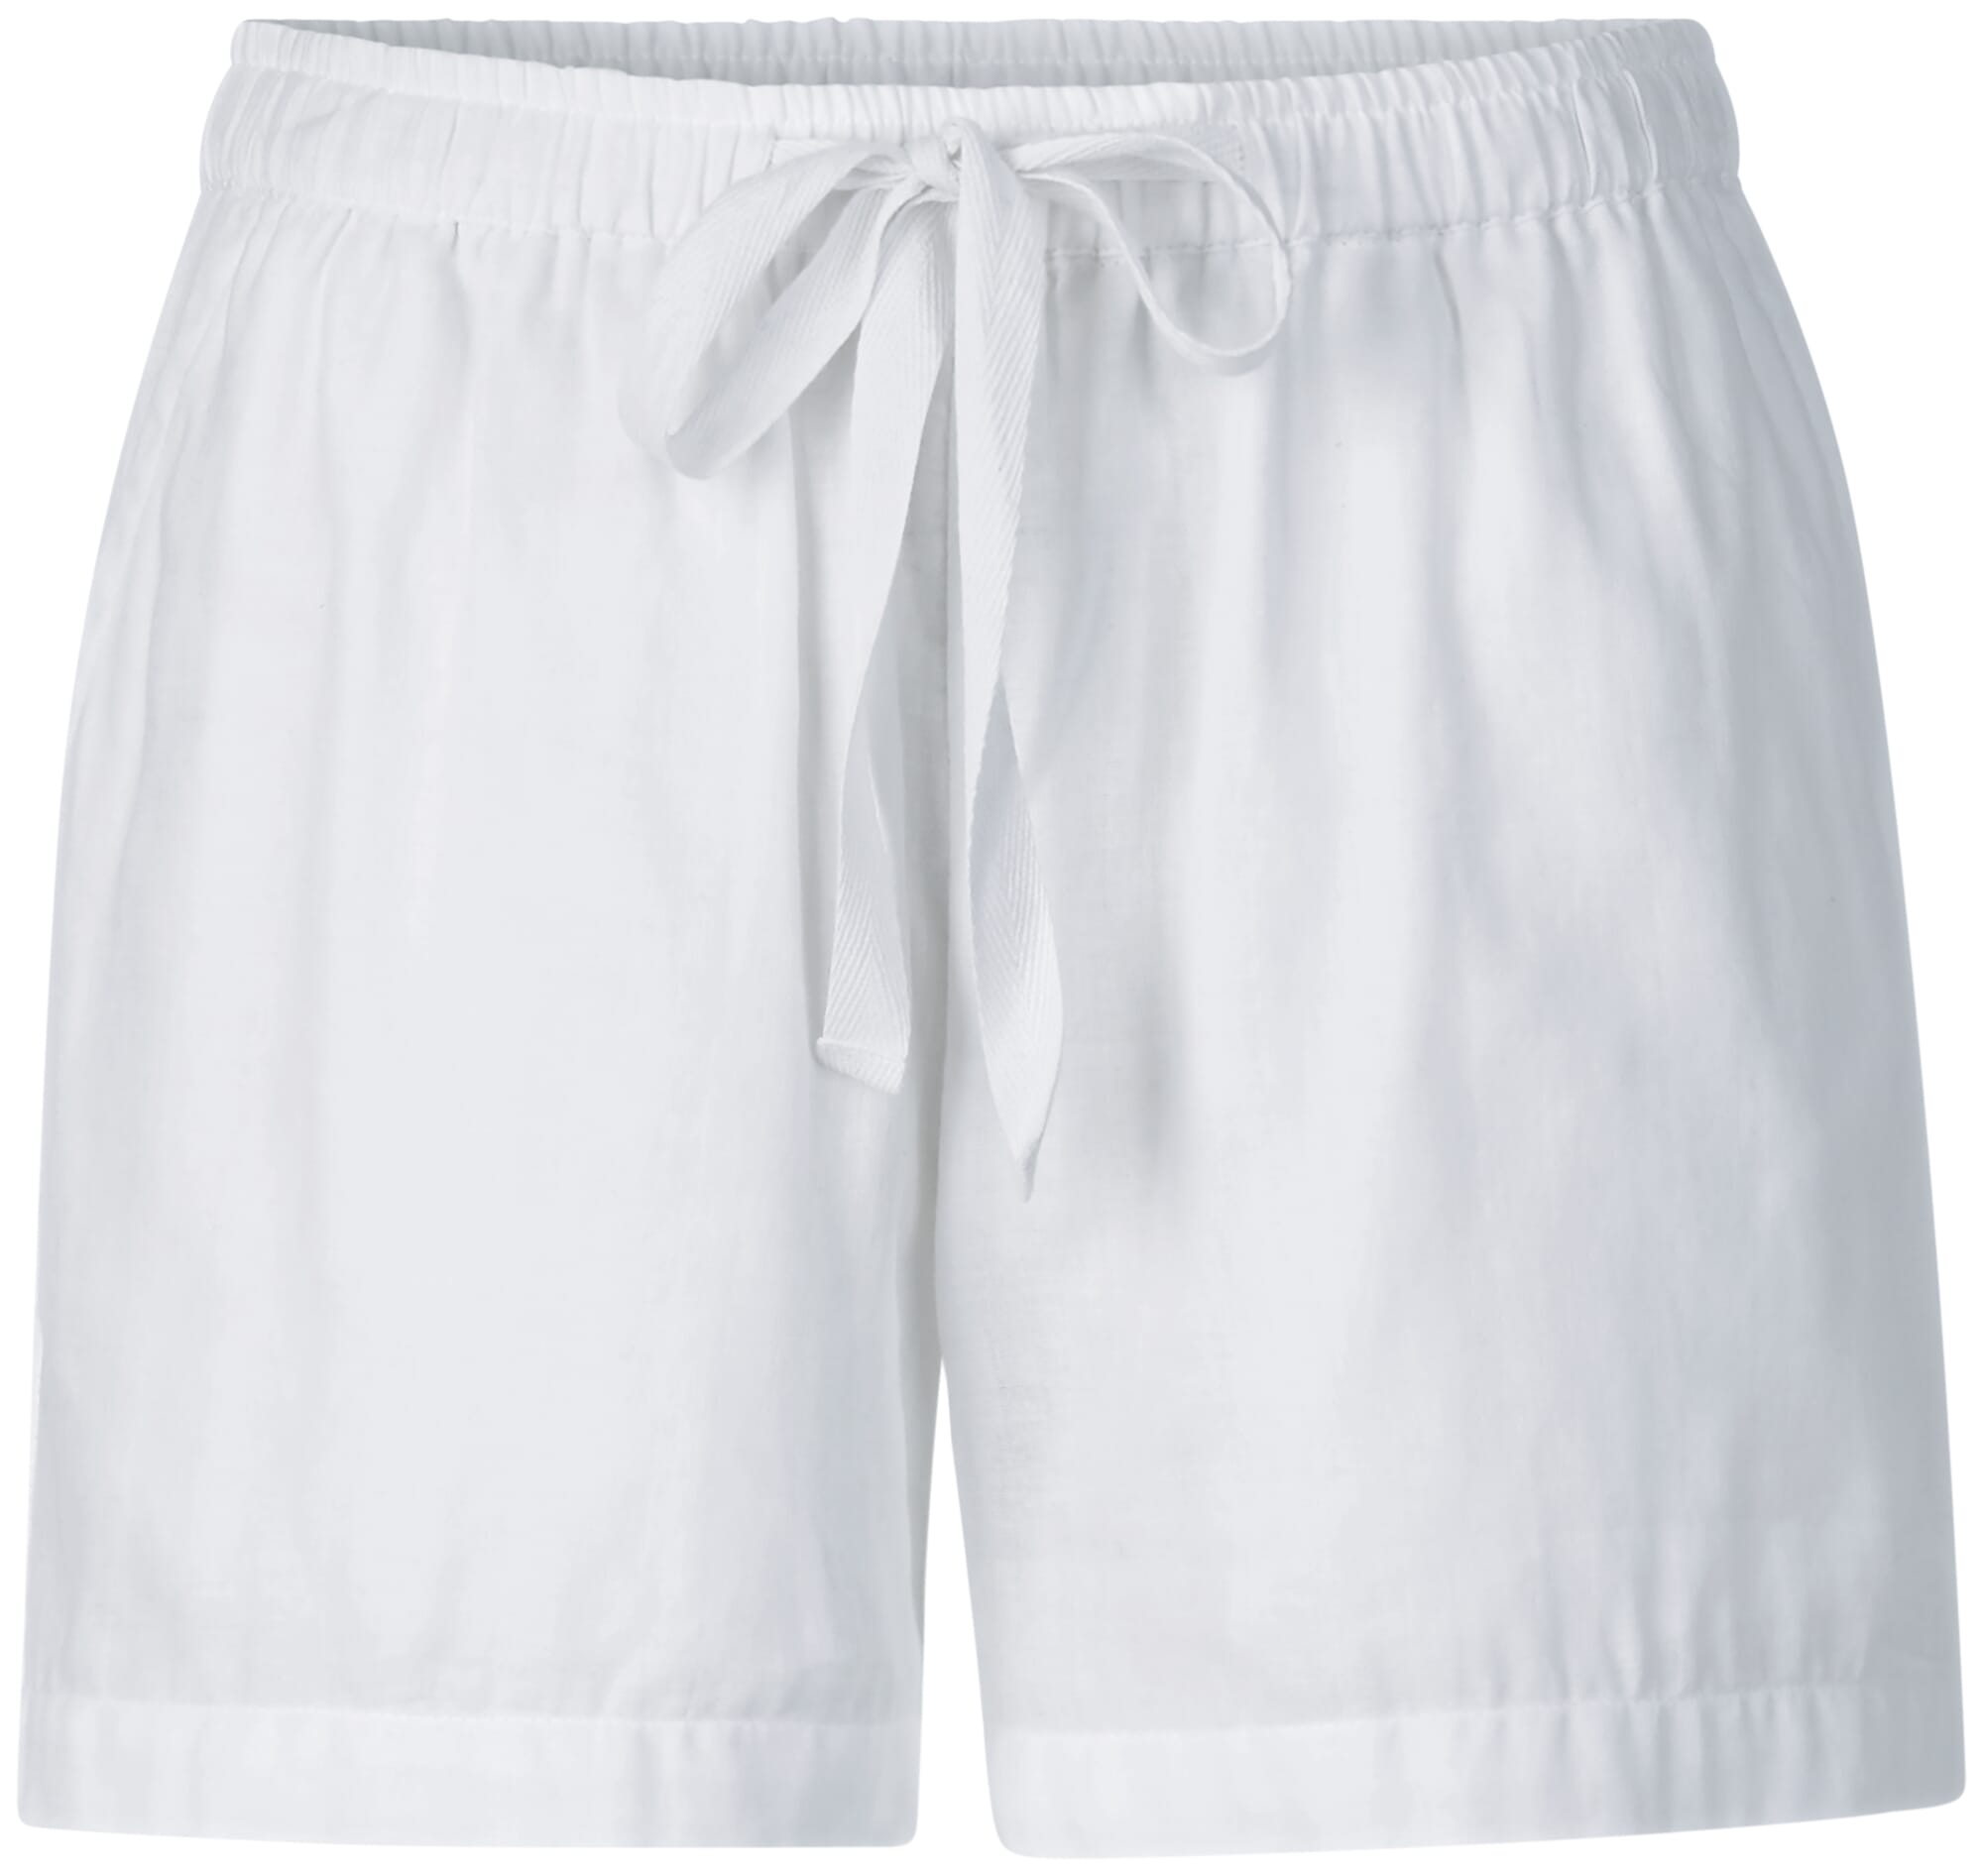 Ladies sleep shorts, White